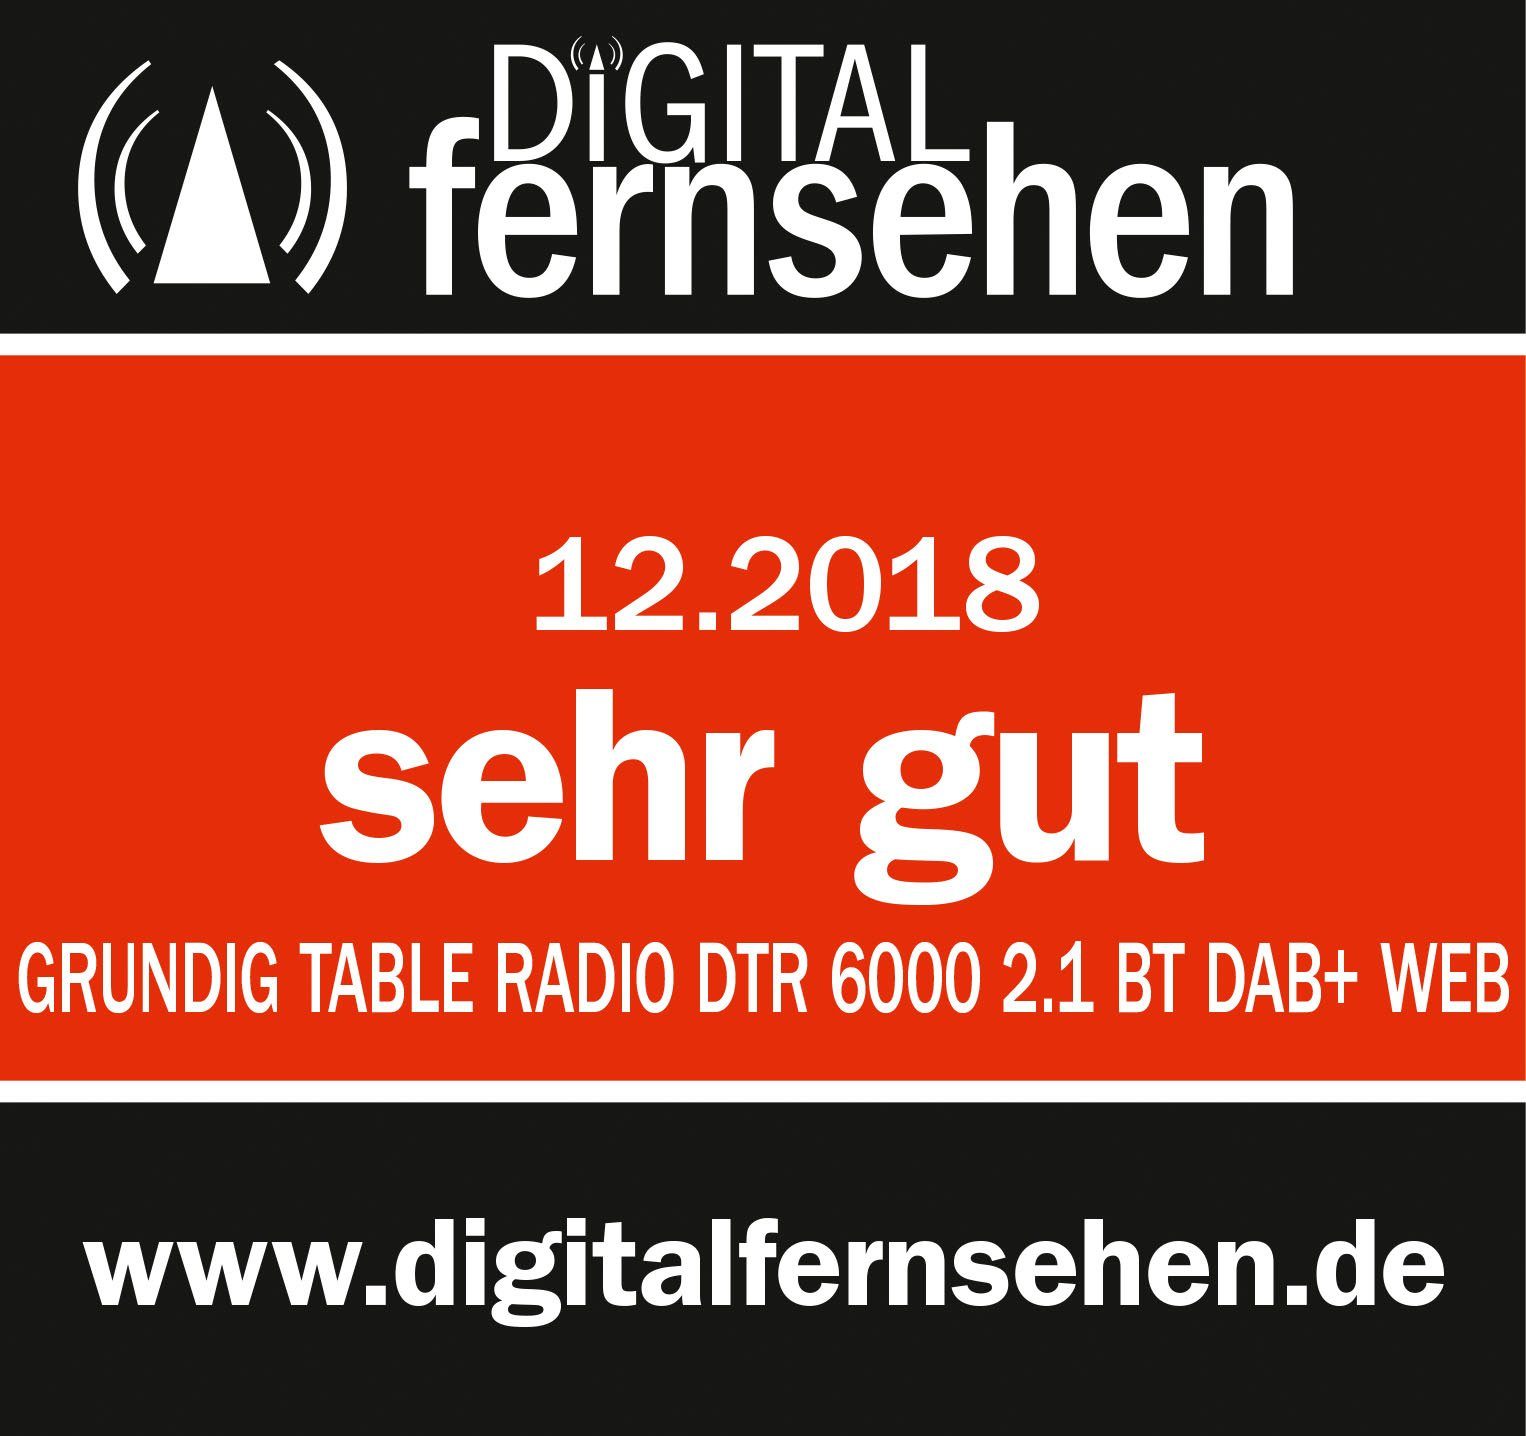 W) (Digitalradio 28 schwarz (DAB), Internetradio, 6000 DTR Grundig X FM-Tuner (DAB) mit RDS, Digitalradio